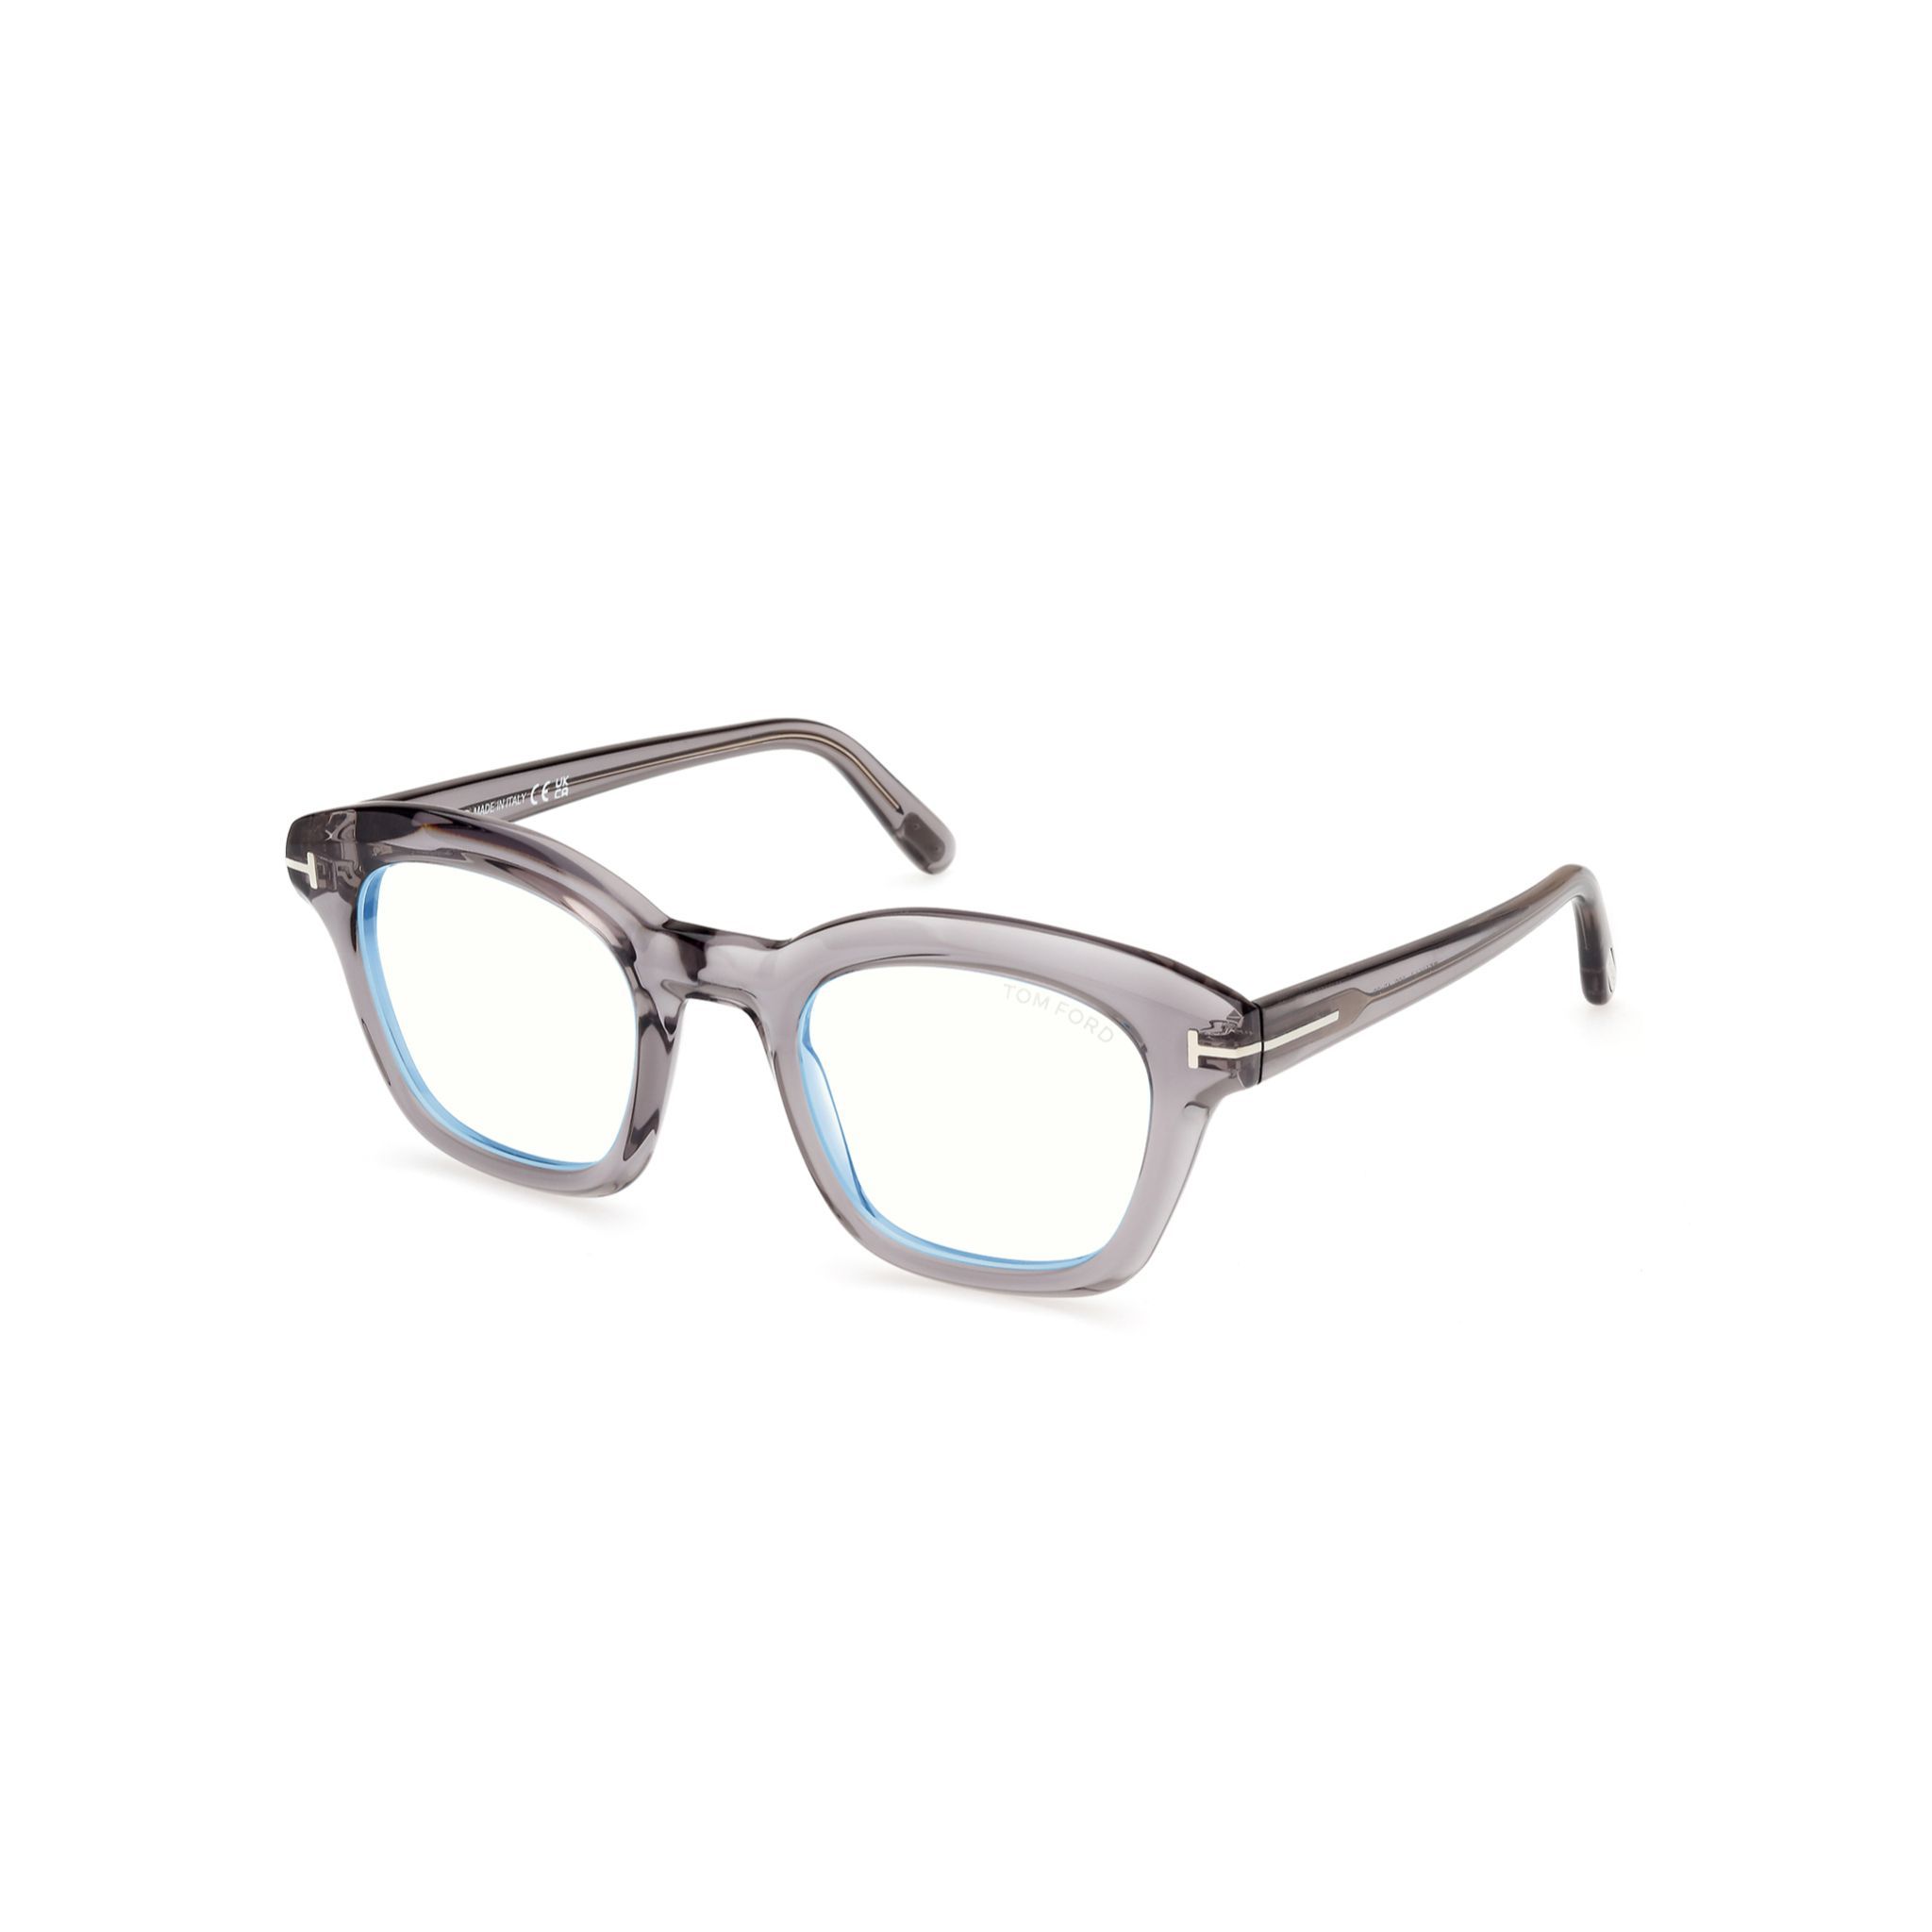 FT5961 Square Eyeglasses B020 - size 49